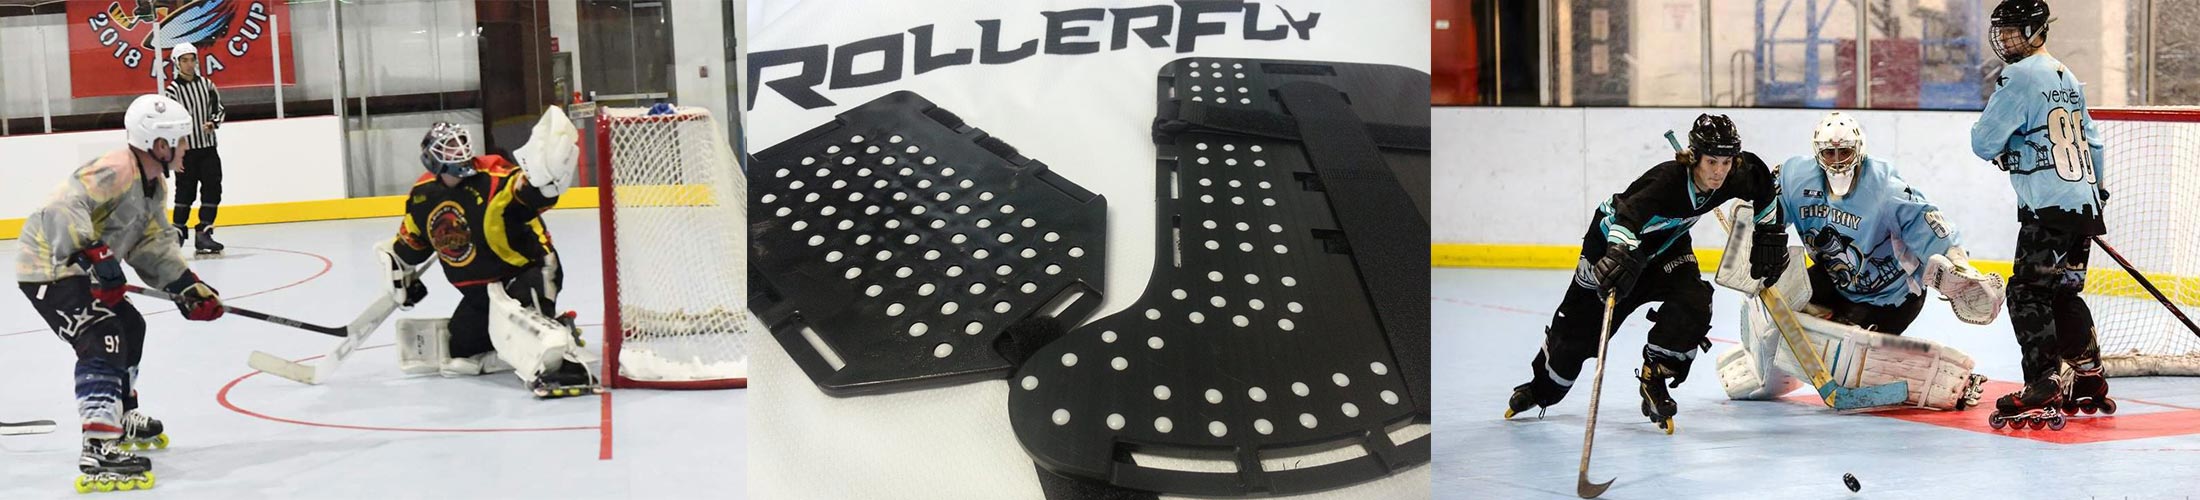  Rollerfly Goalie Slide Plates for Inline Or Ball